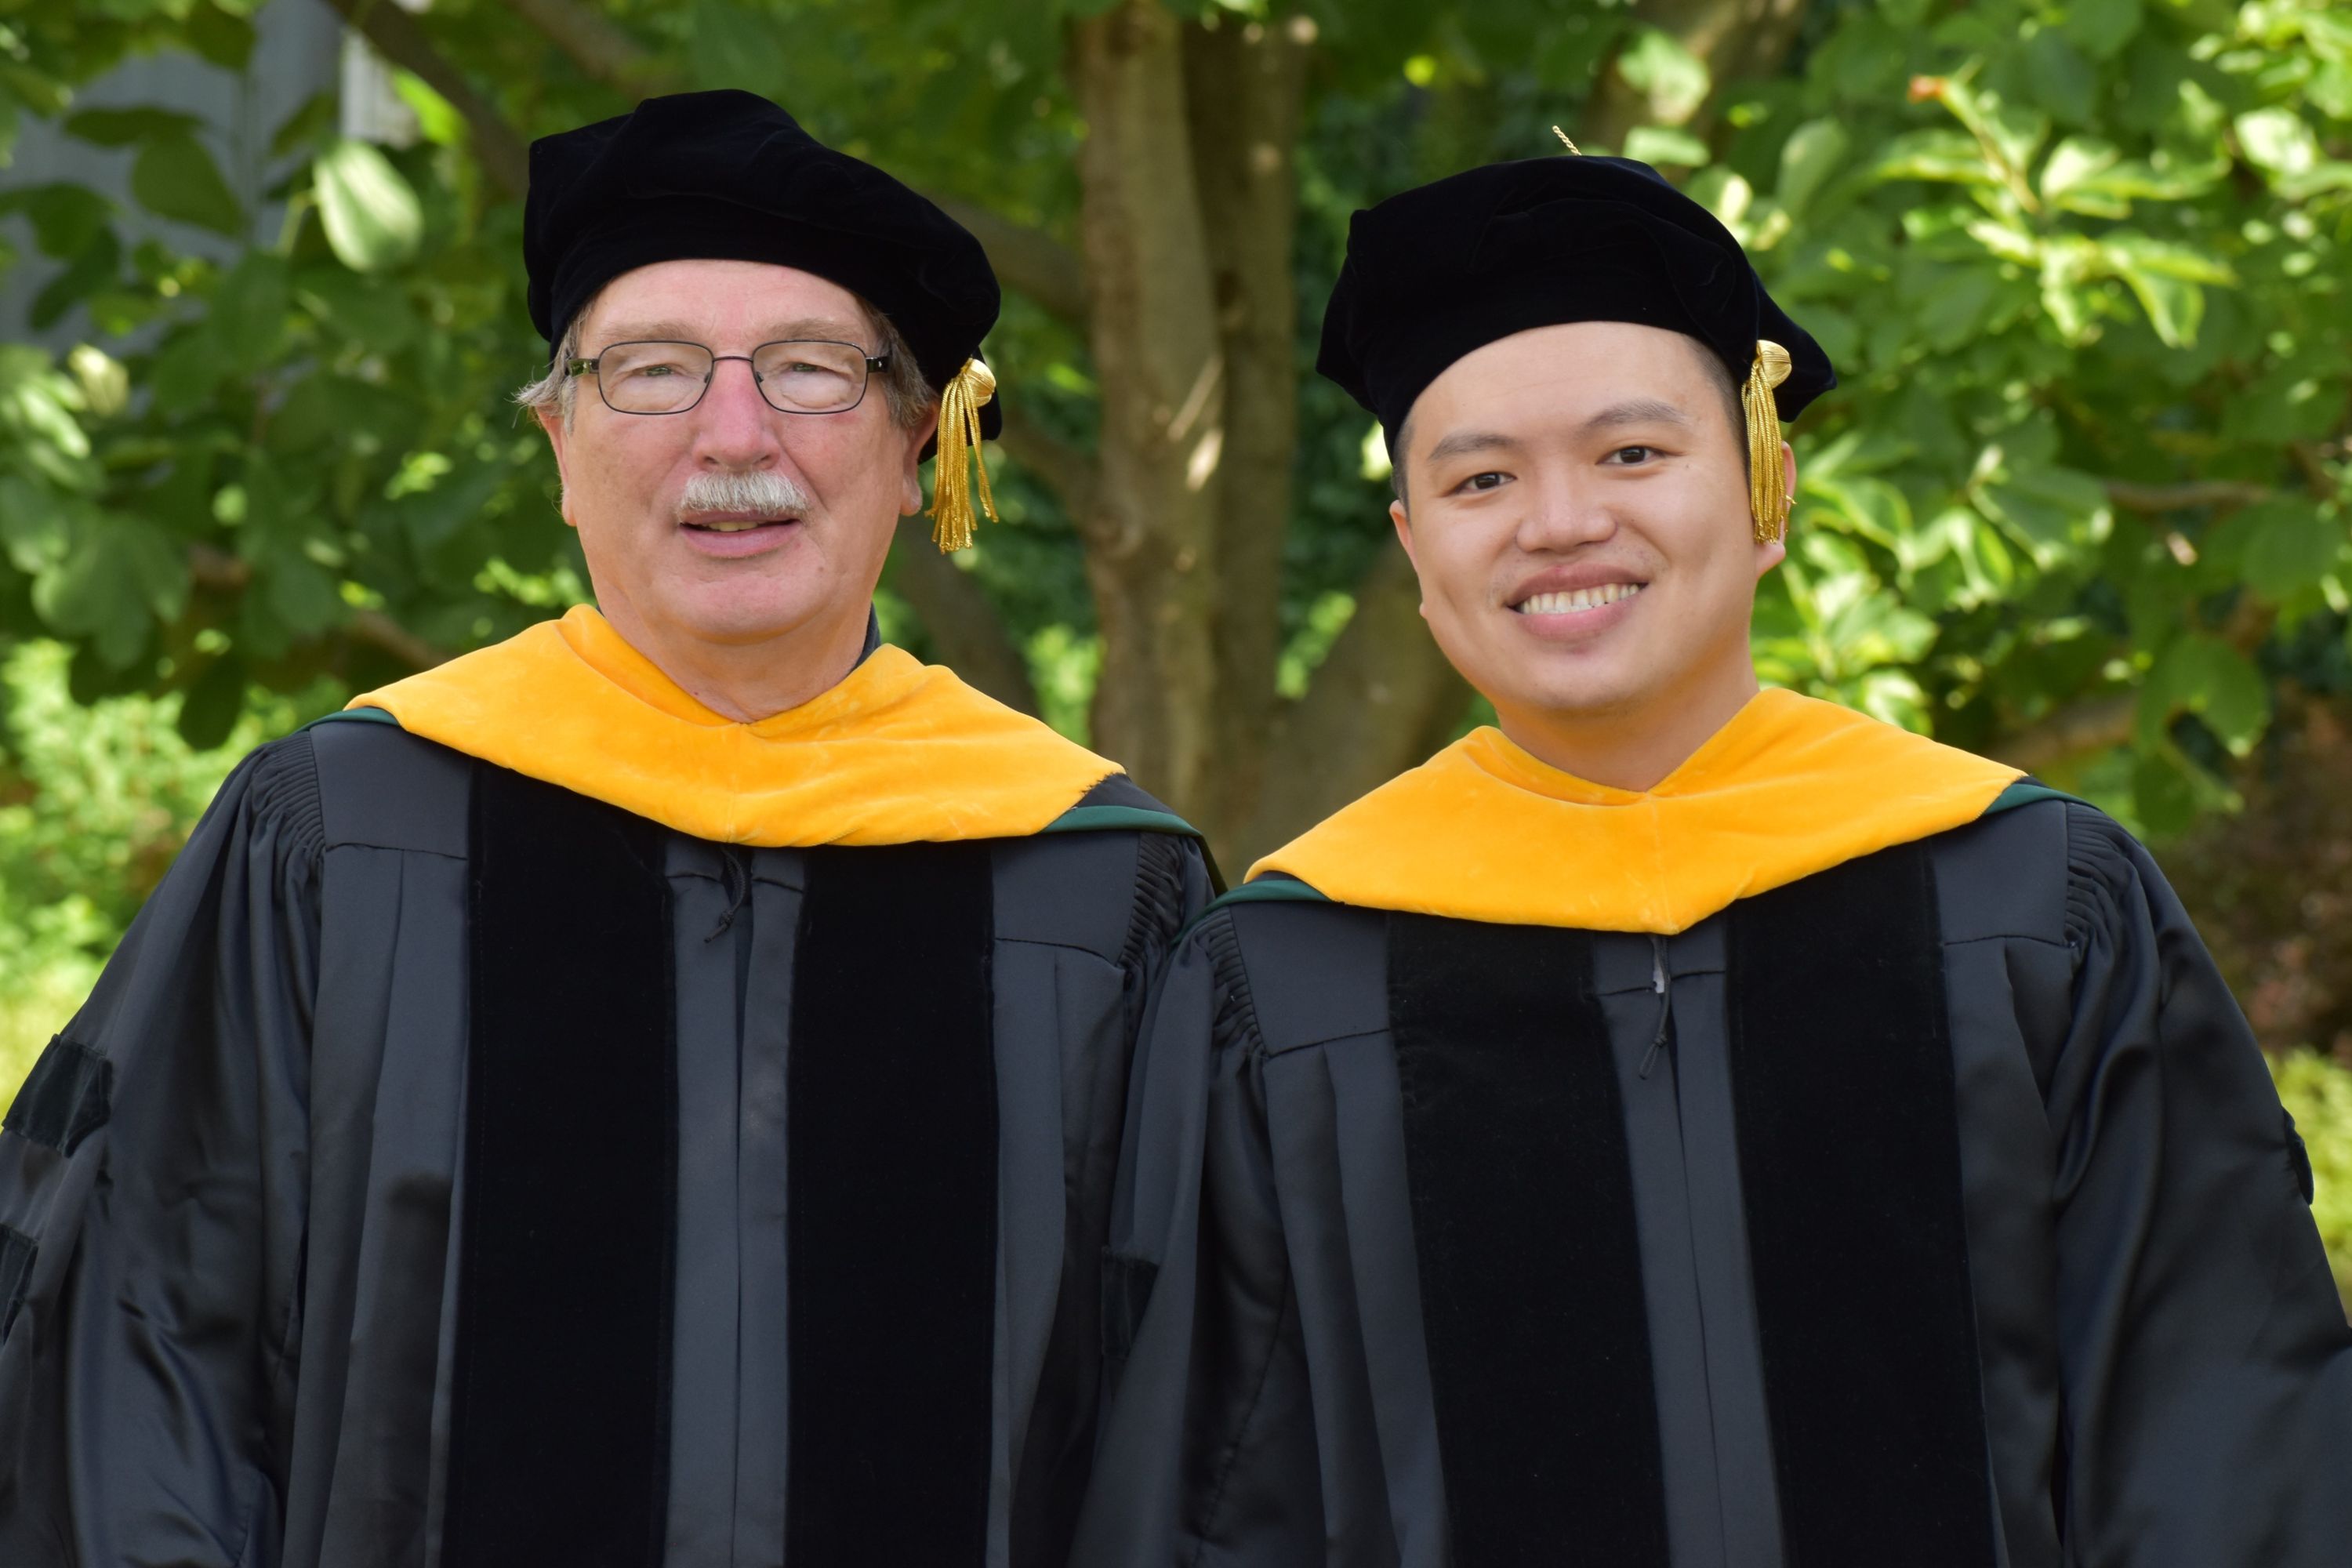 Christoph Benning and Yang-Tsung Lin in graduation robes